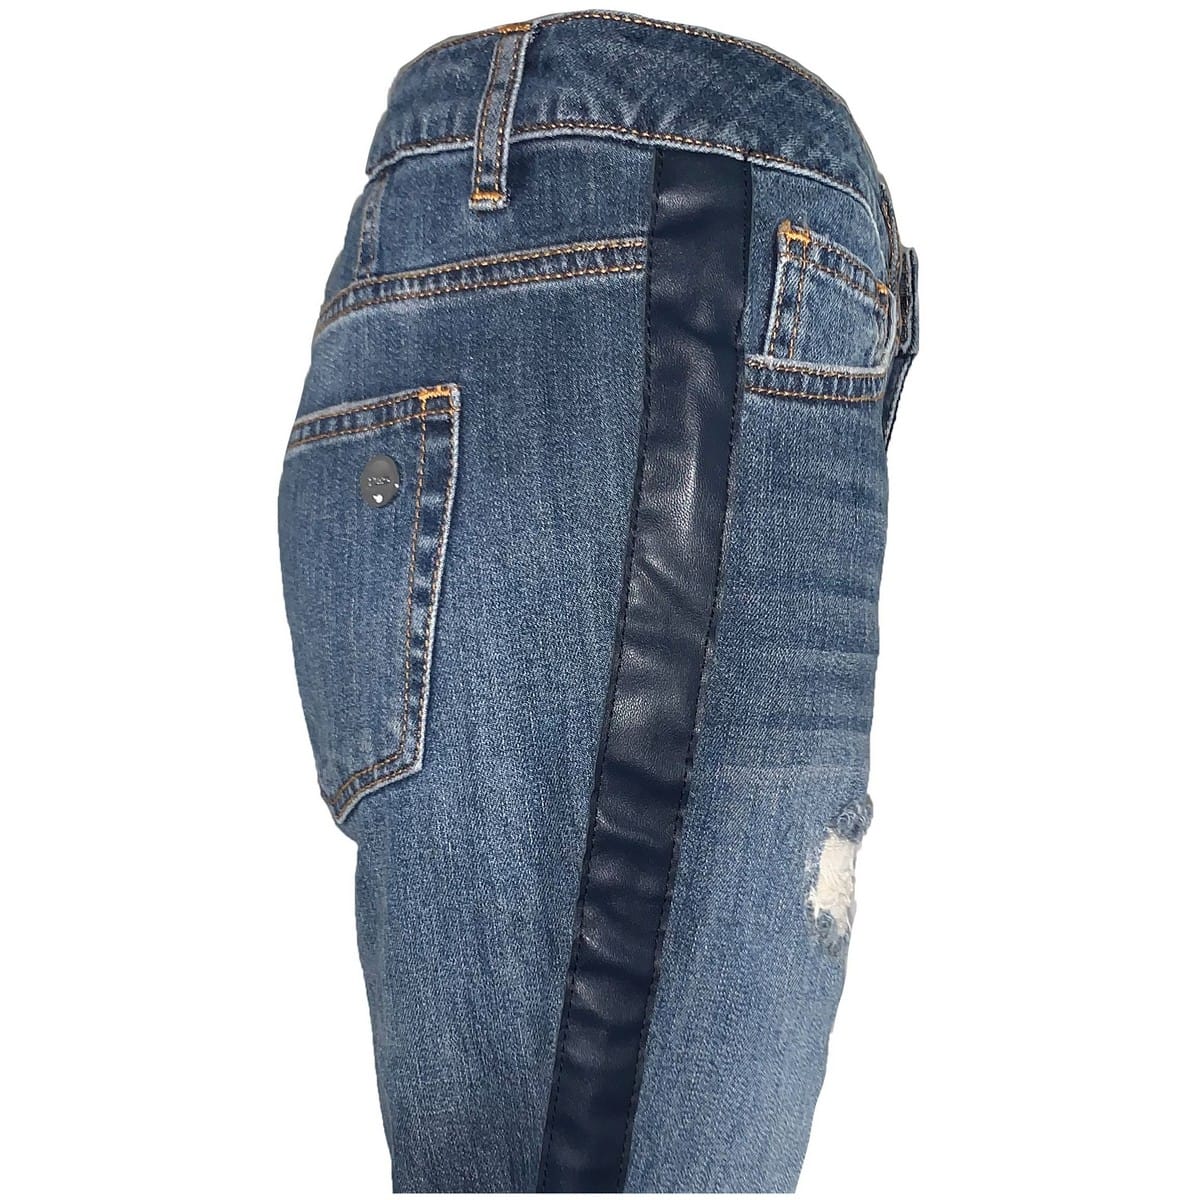 Liu Jo • blauwe slim fit jeans met beschadigingen • shop BollyWolly